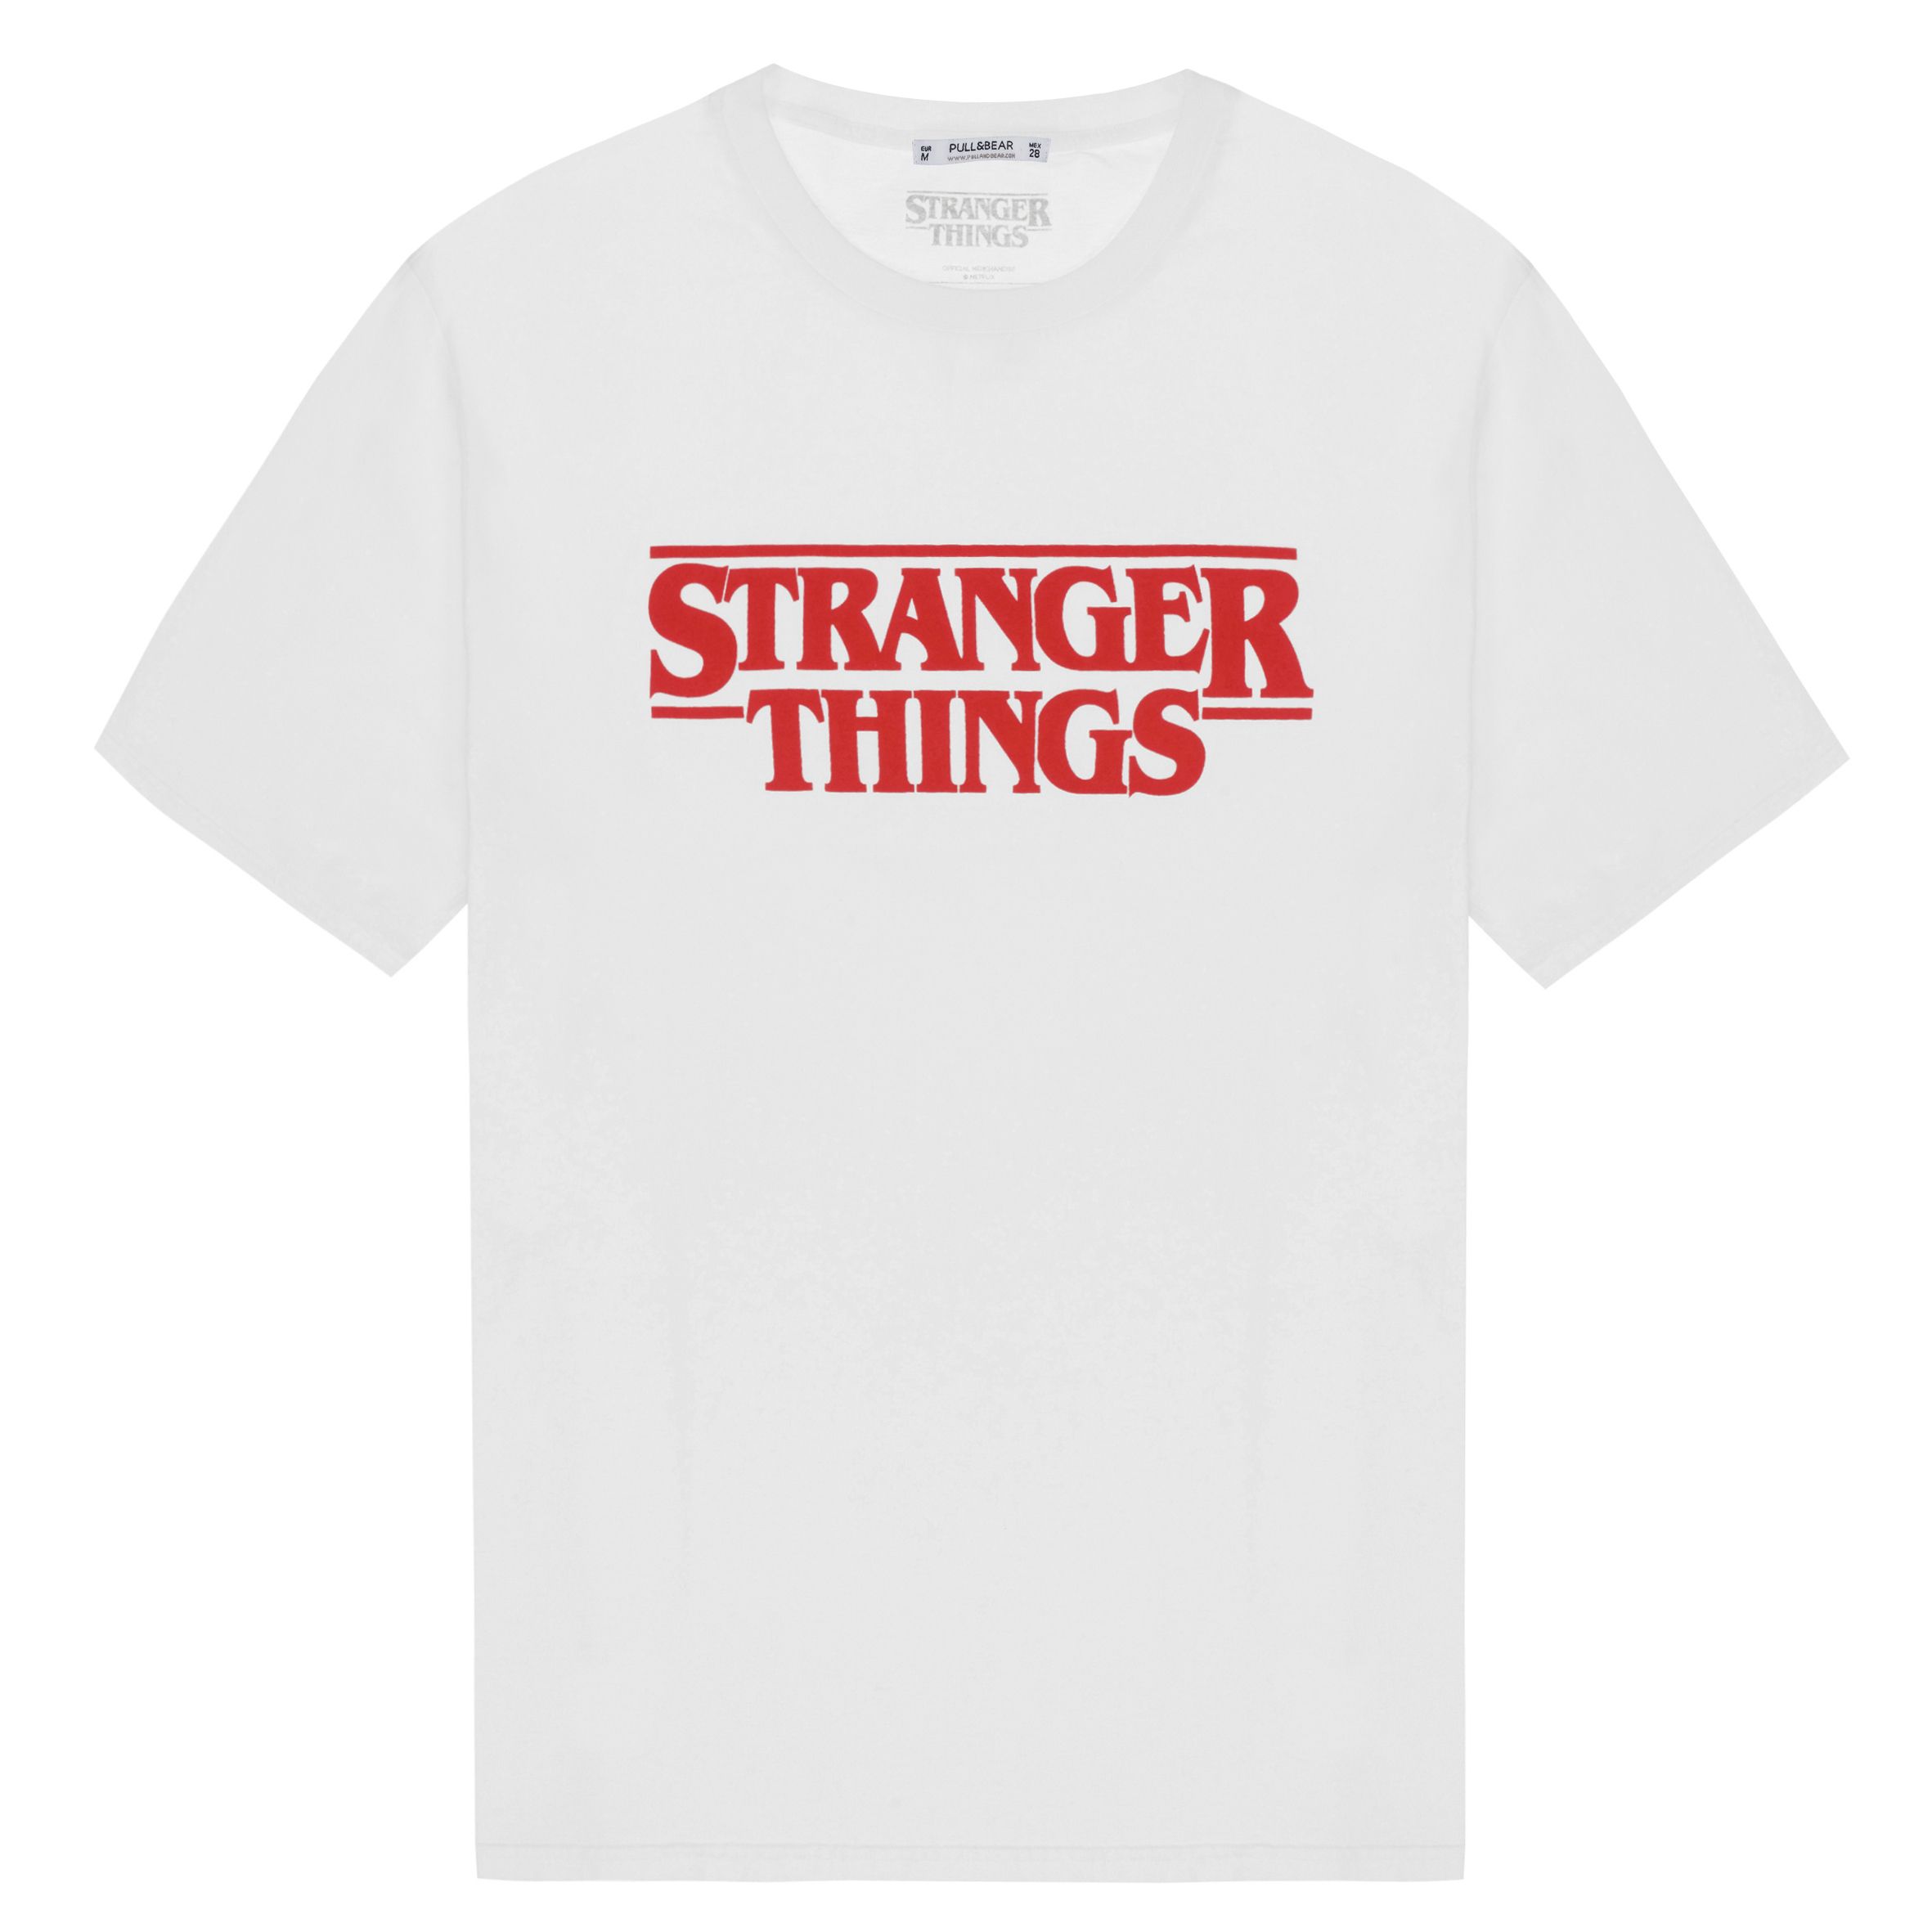 Pull&Bear lanza prendas de Stranger Things - Stranger Things y las 15 prendas para vestirte de la serie